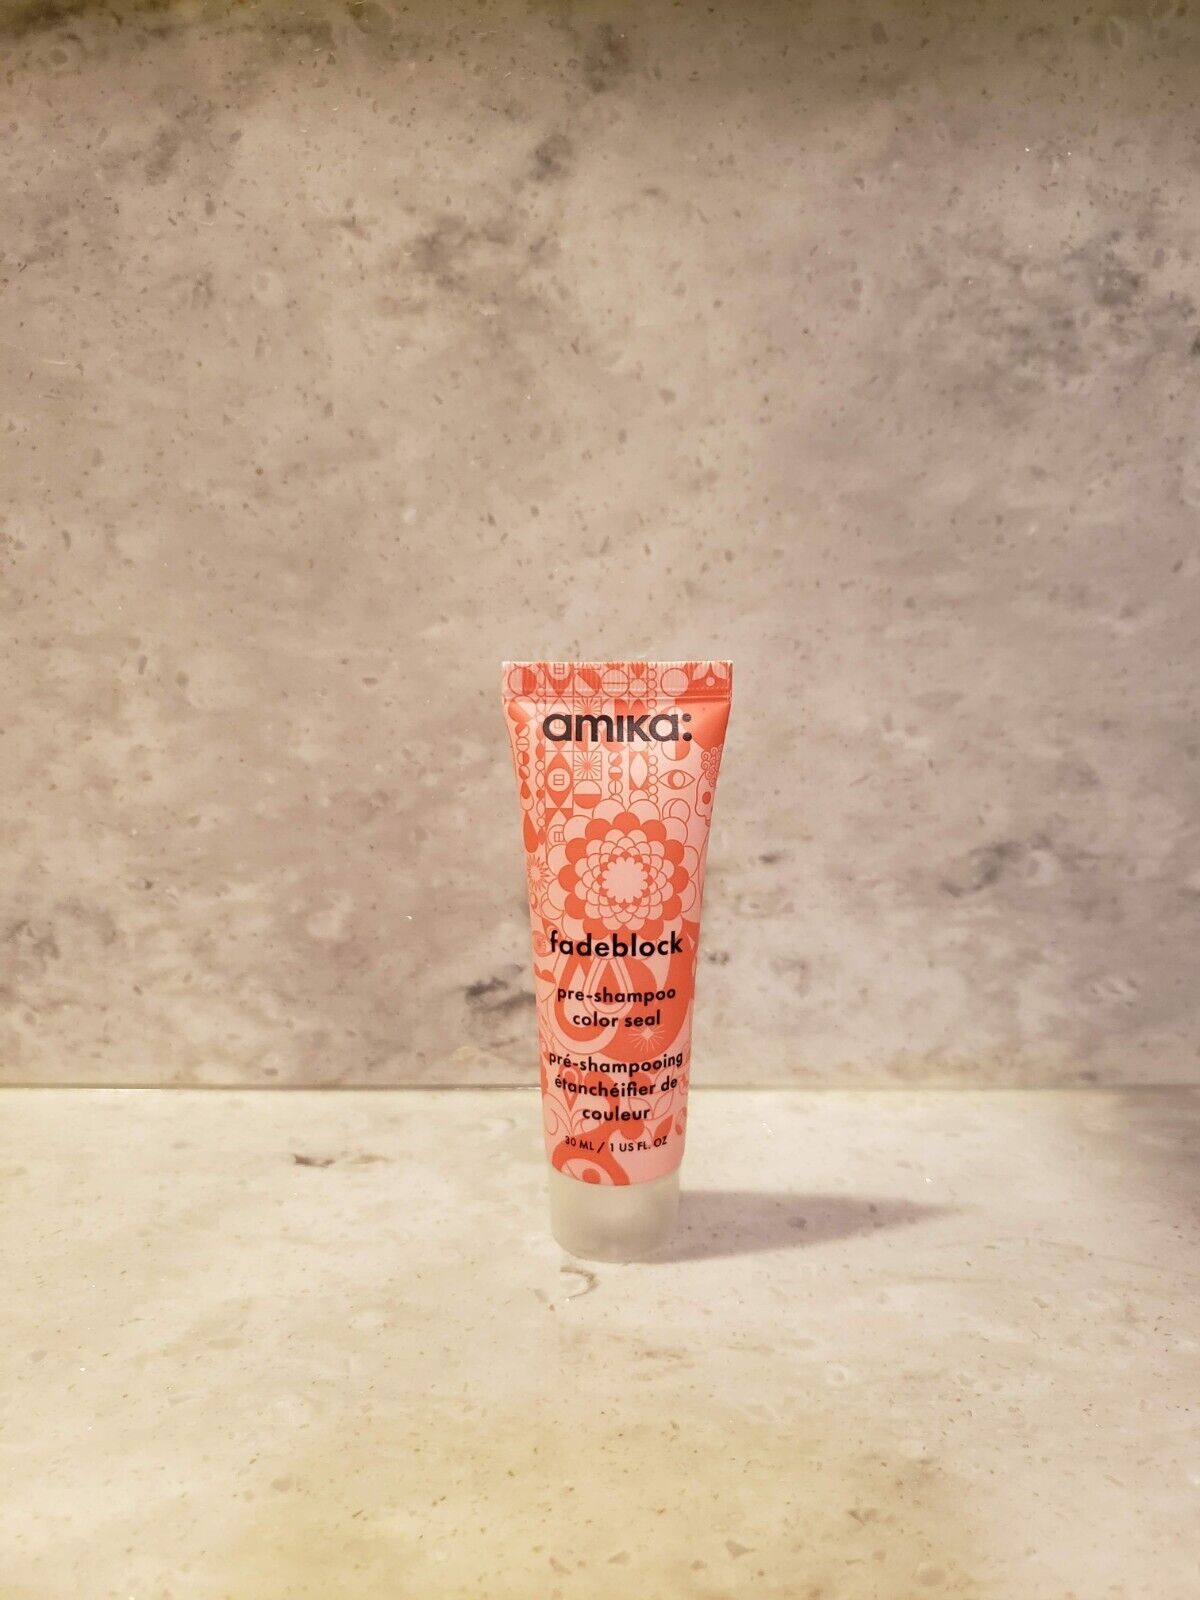 Amika Fadeblock Pre-Shampoo Color Seal Fade Protectant 1 oz Travel Size - $8.32